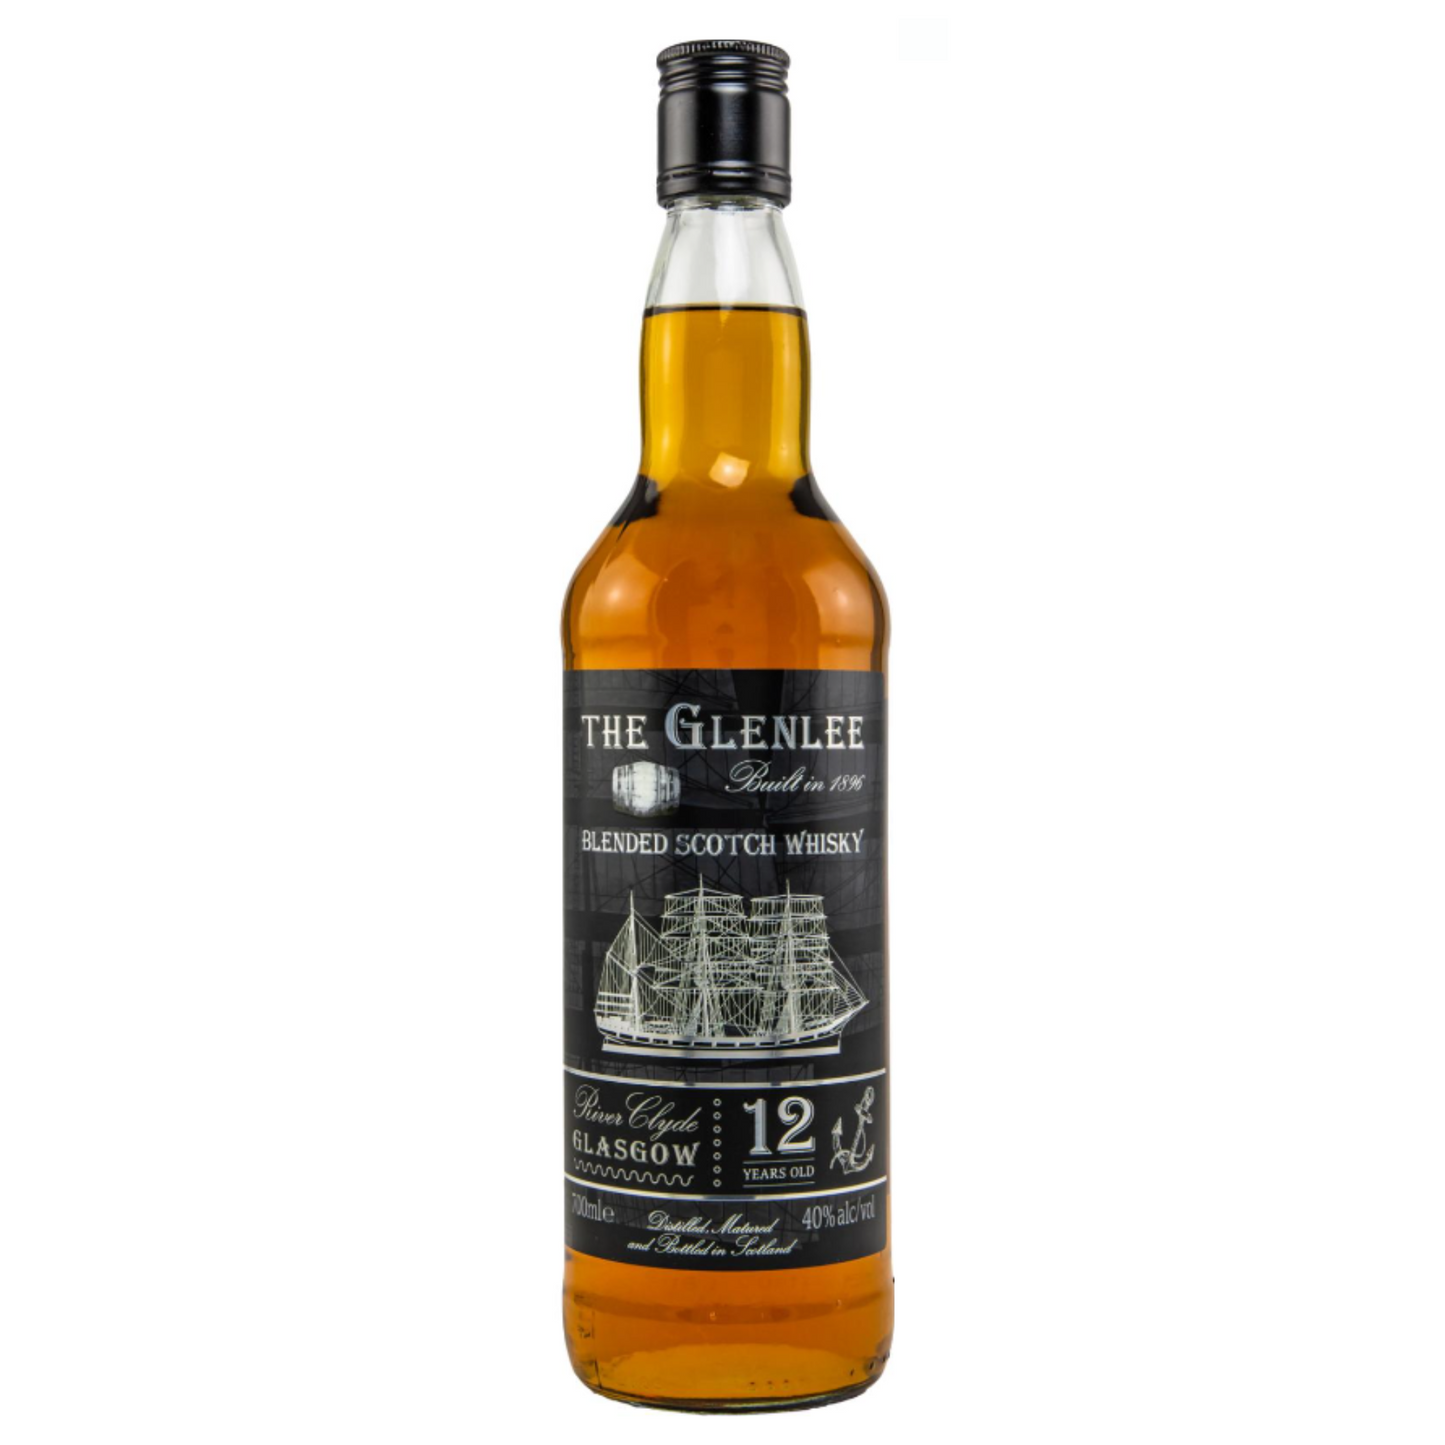 The Glenlee blended scotch whisky 12y